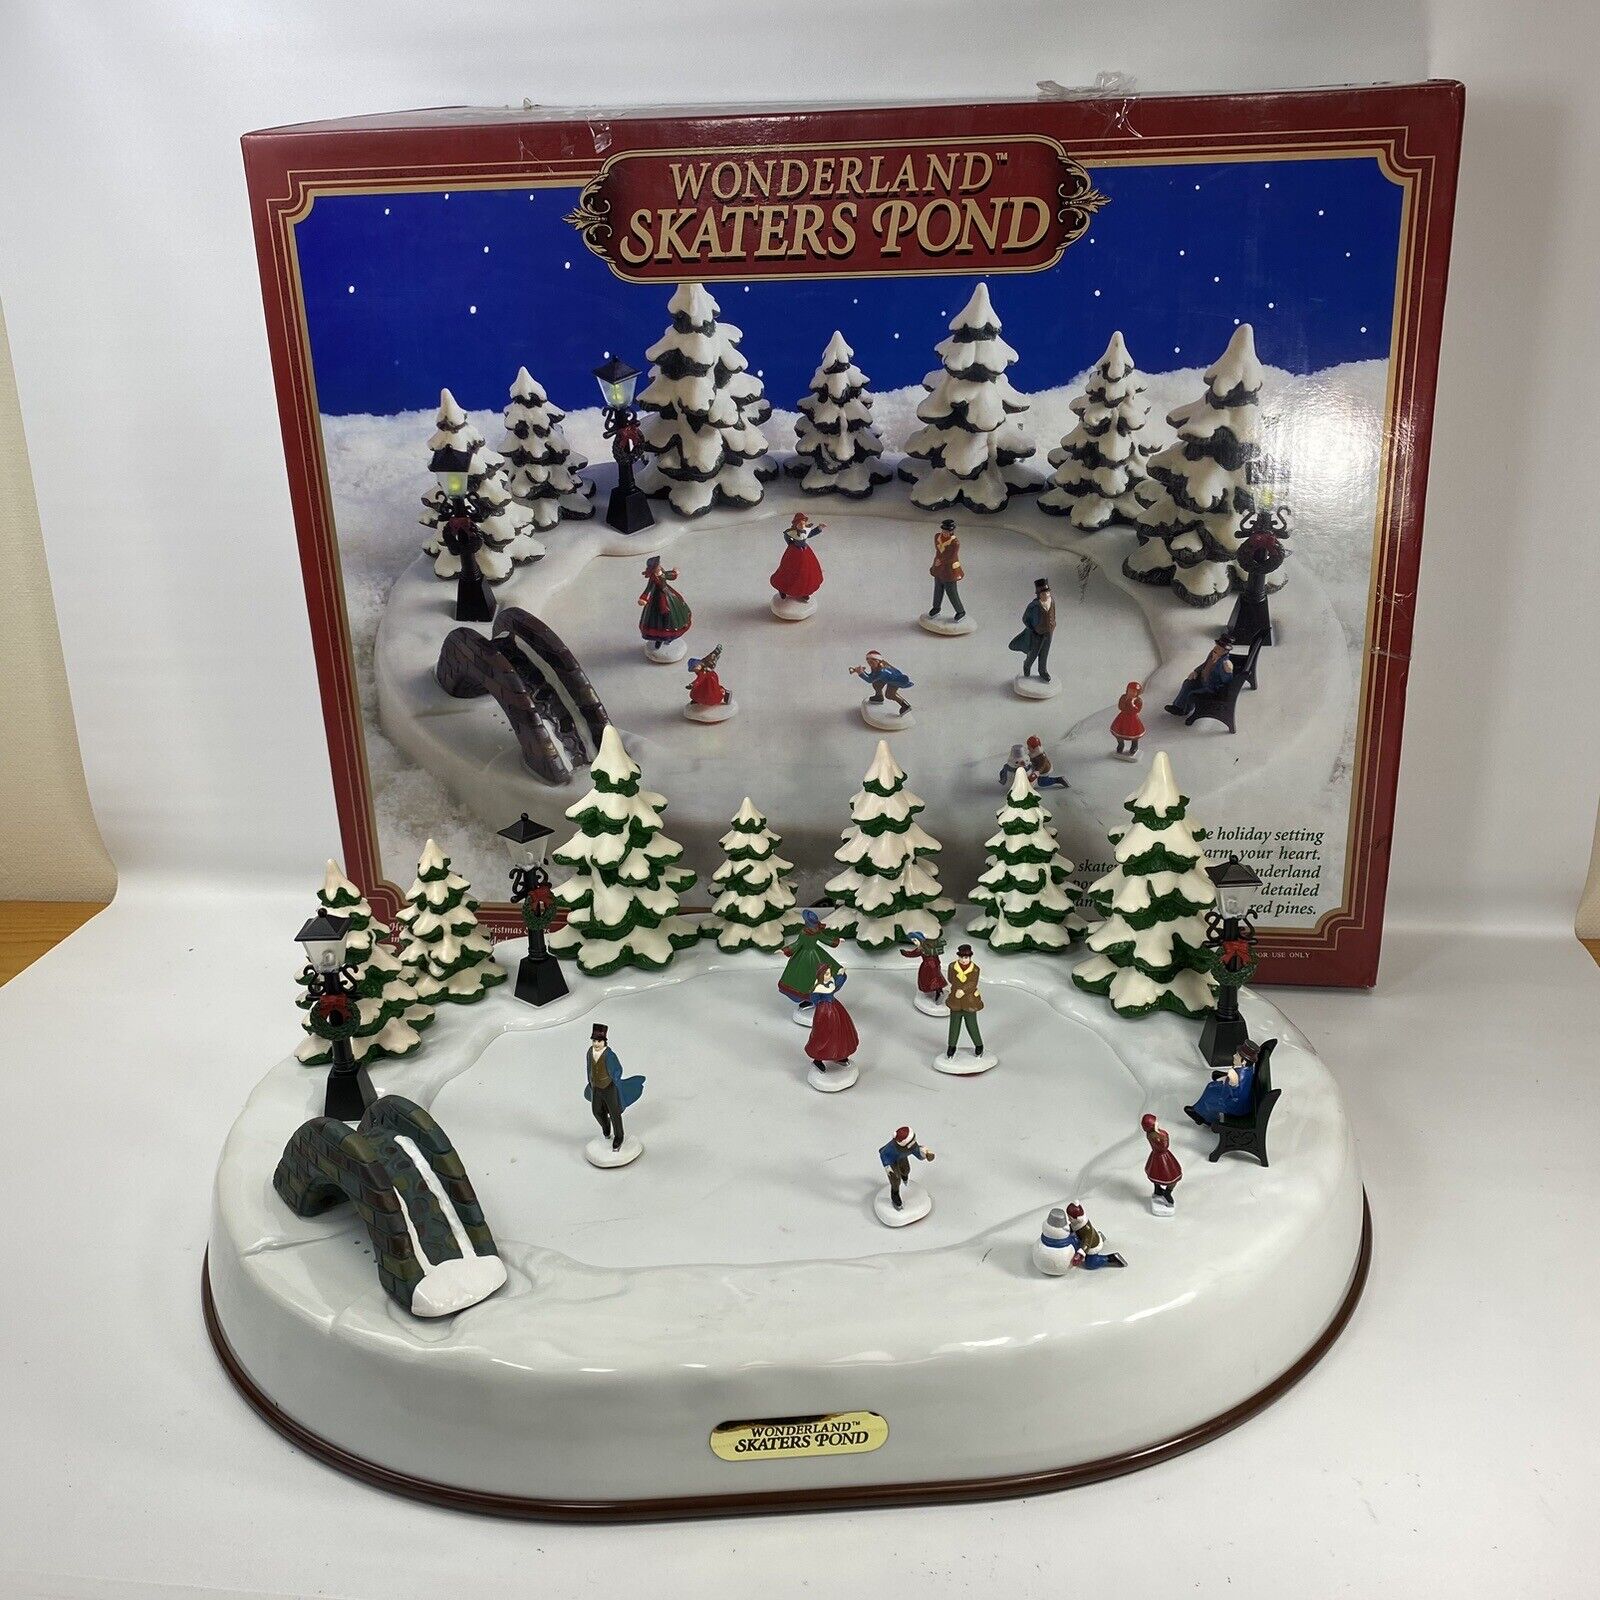 Wonderland Skaters Pond by Christmas Fantasy Ltd 1996 w box complete works